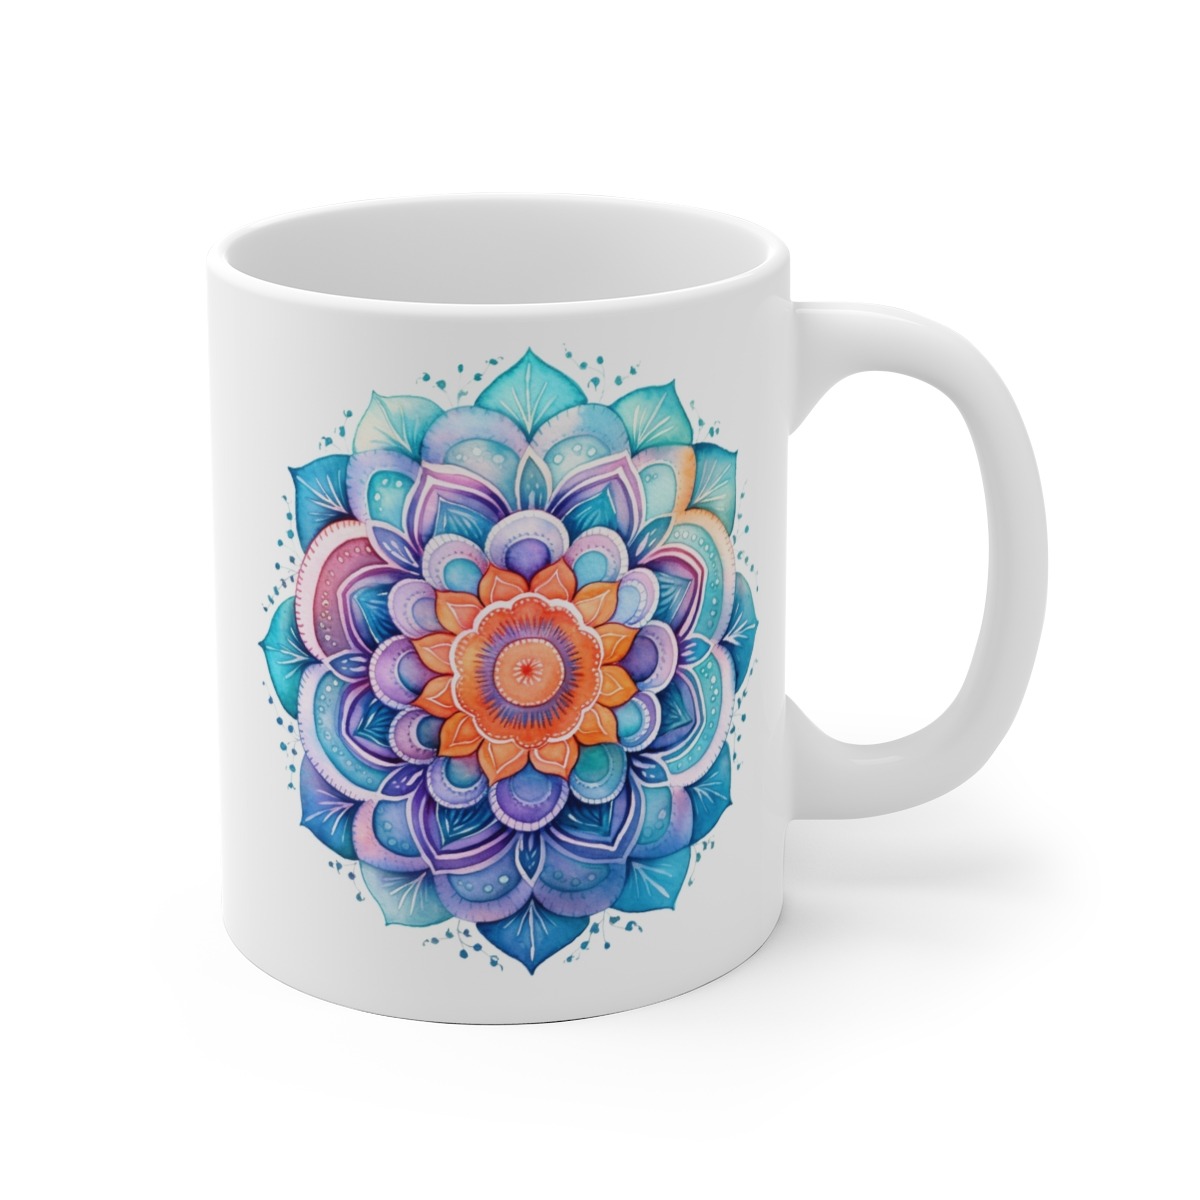 Bedruckte Tasse mit Aquarell-Mandala Muster